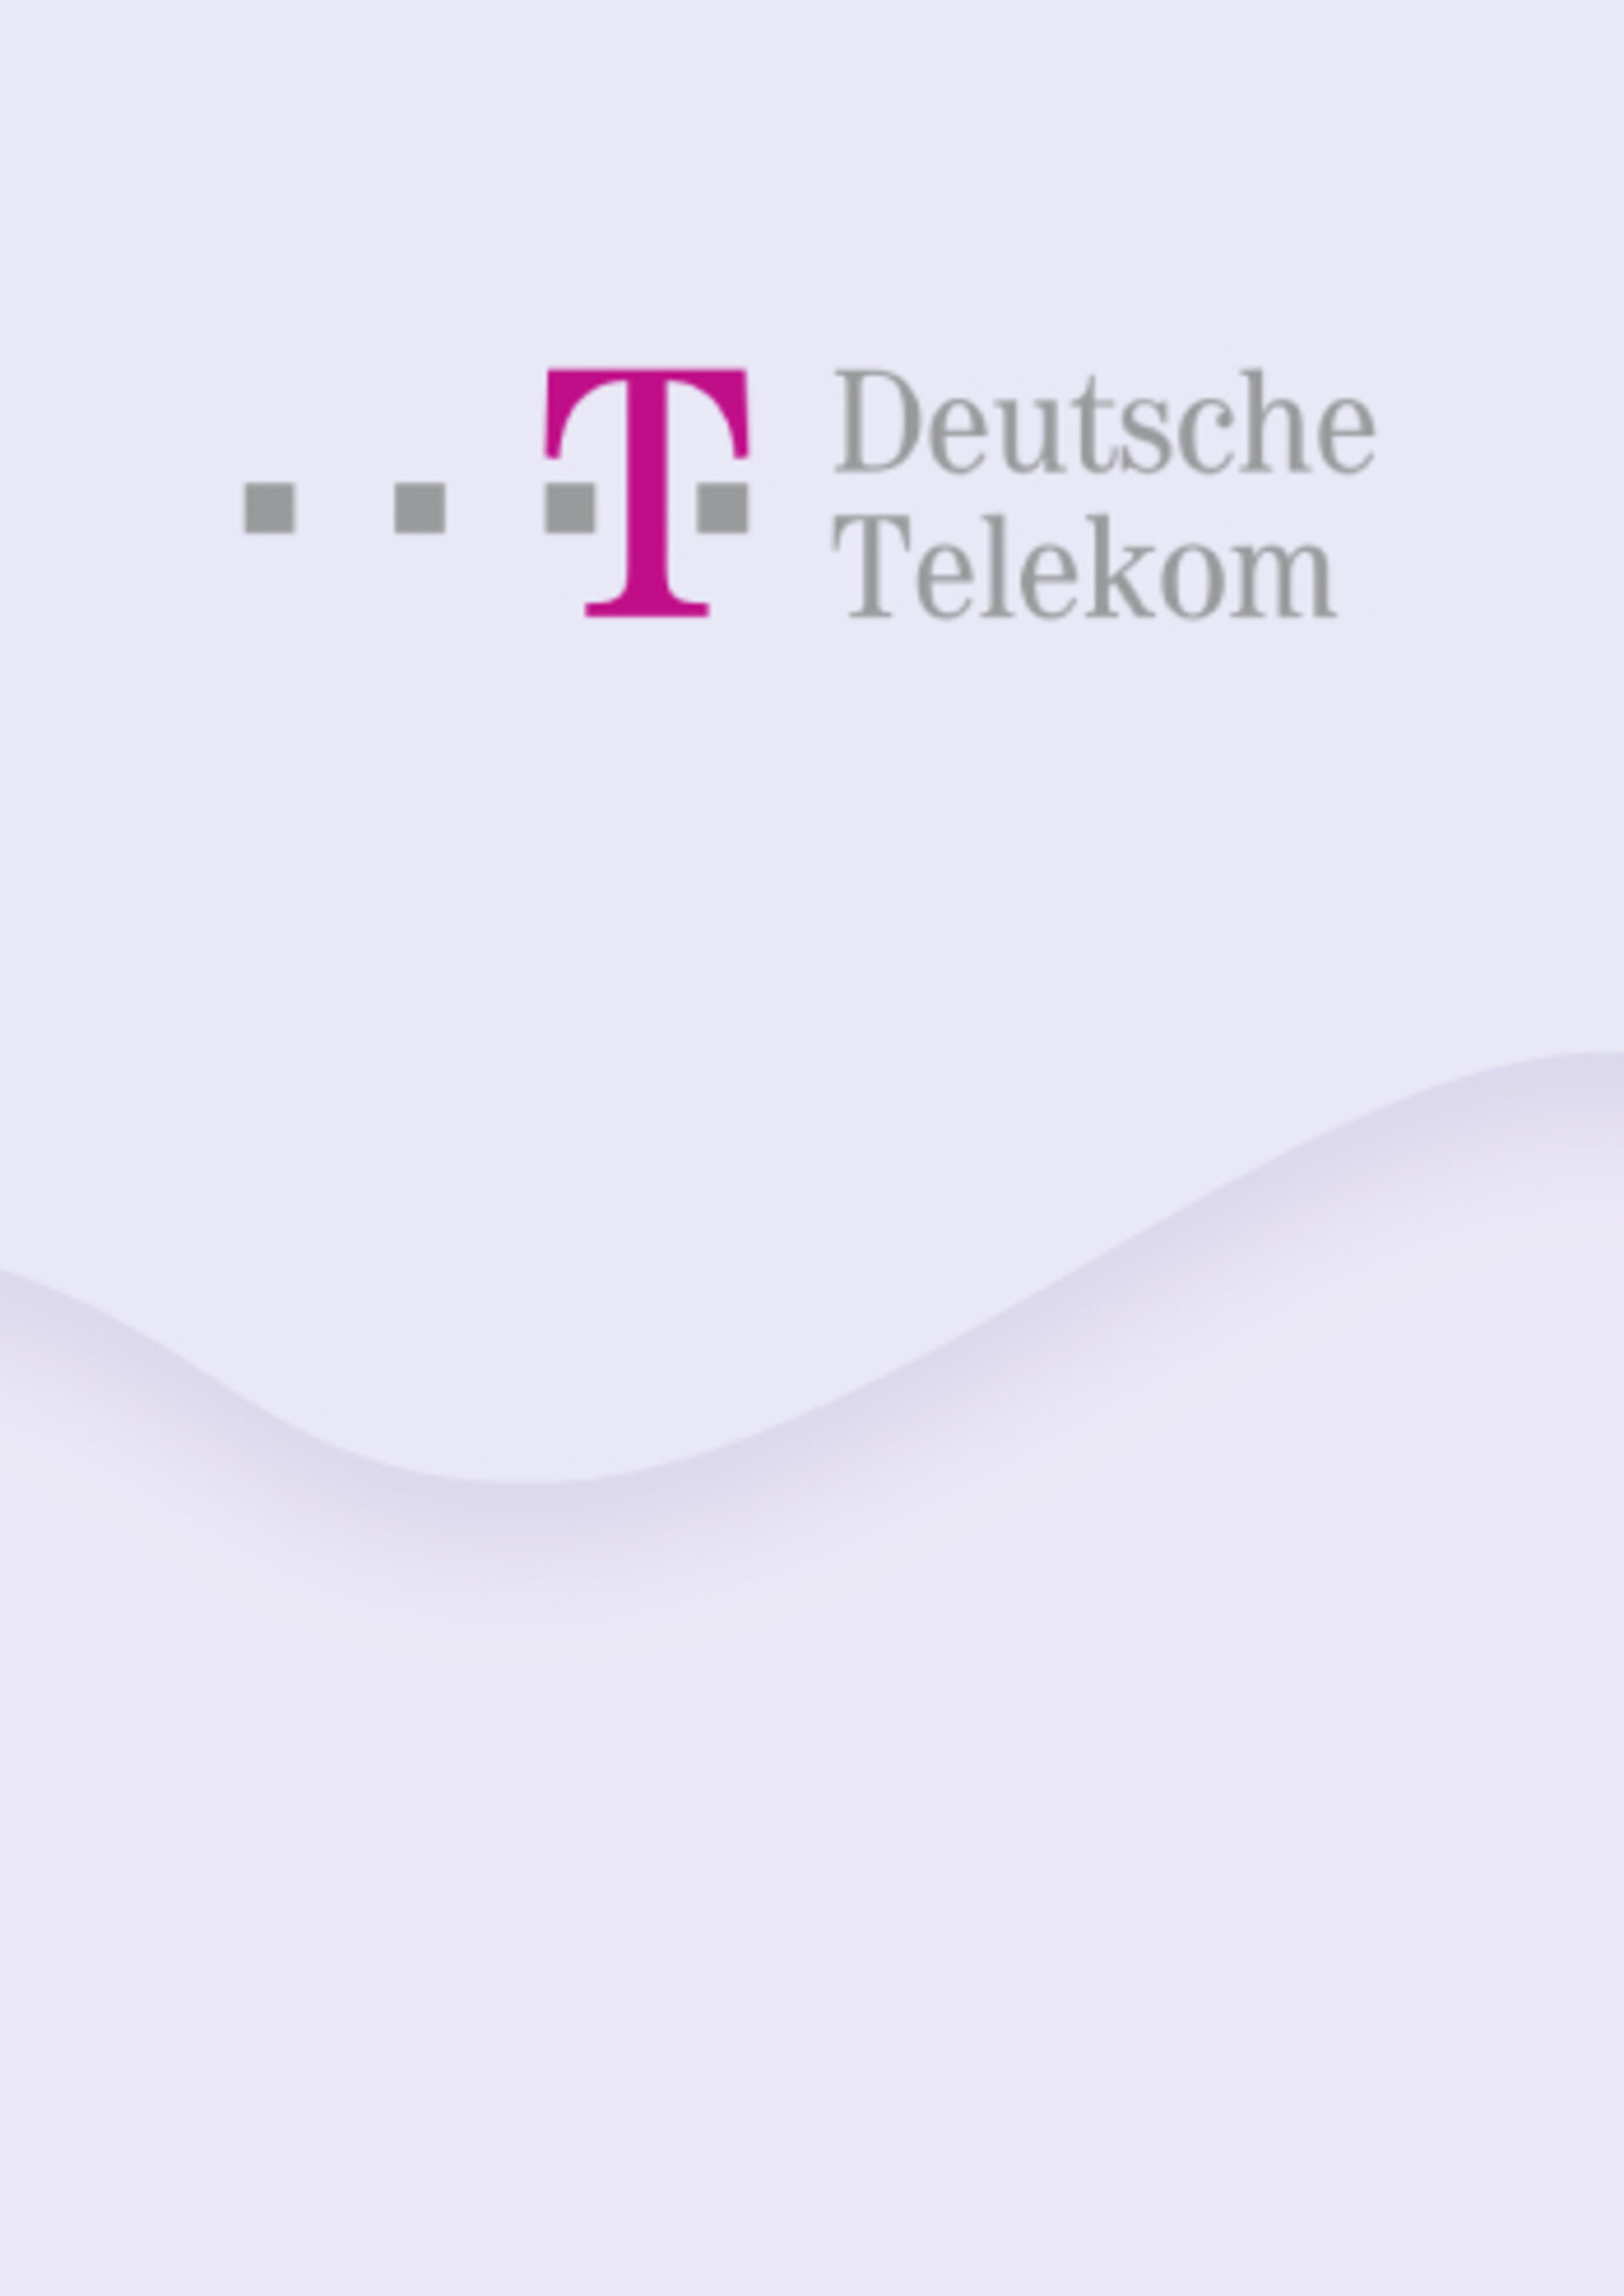 | Fast ENEBA easy Buy | Telekom Deutsche cheaper & top-up recharge